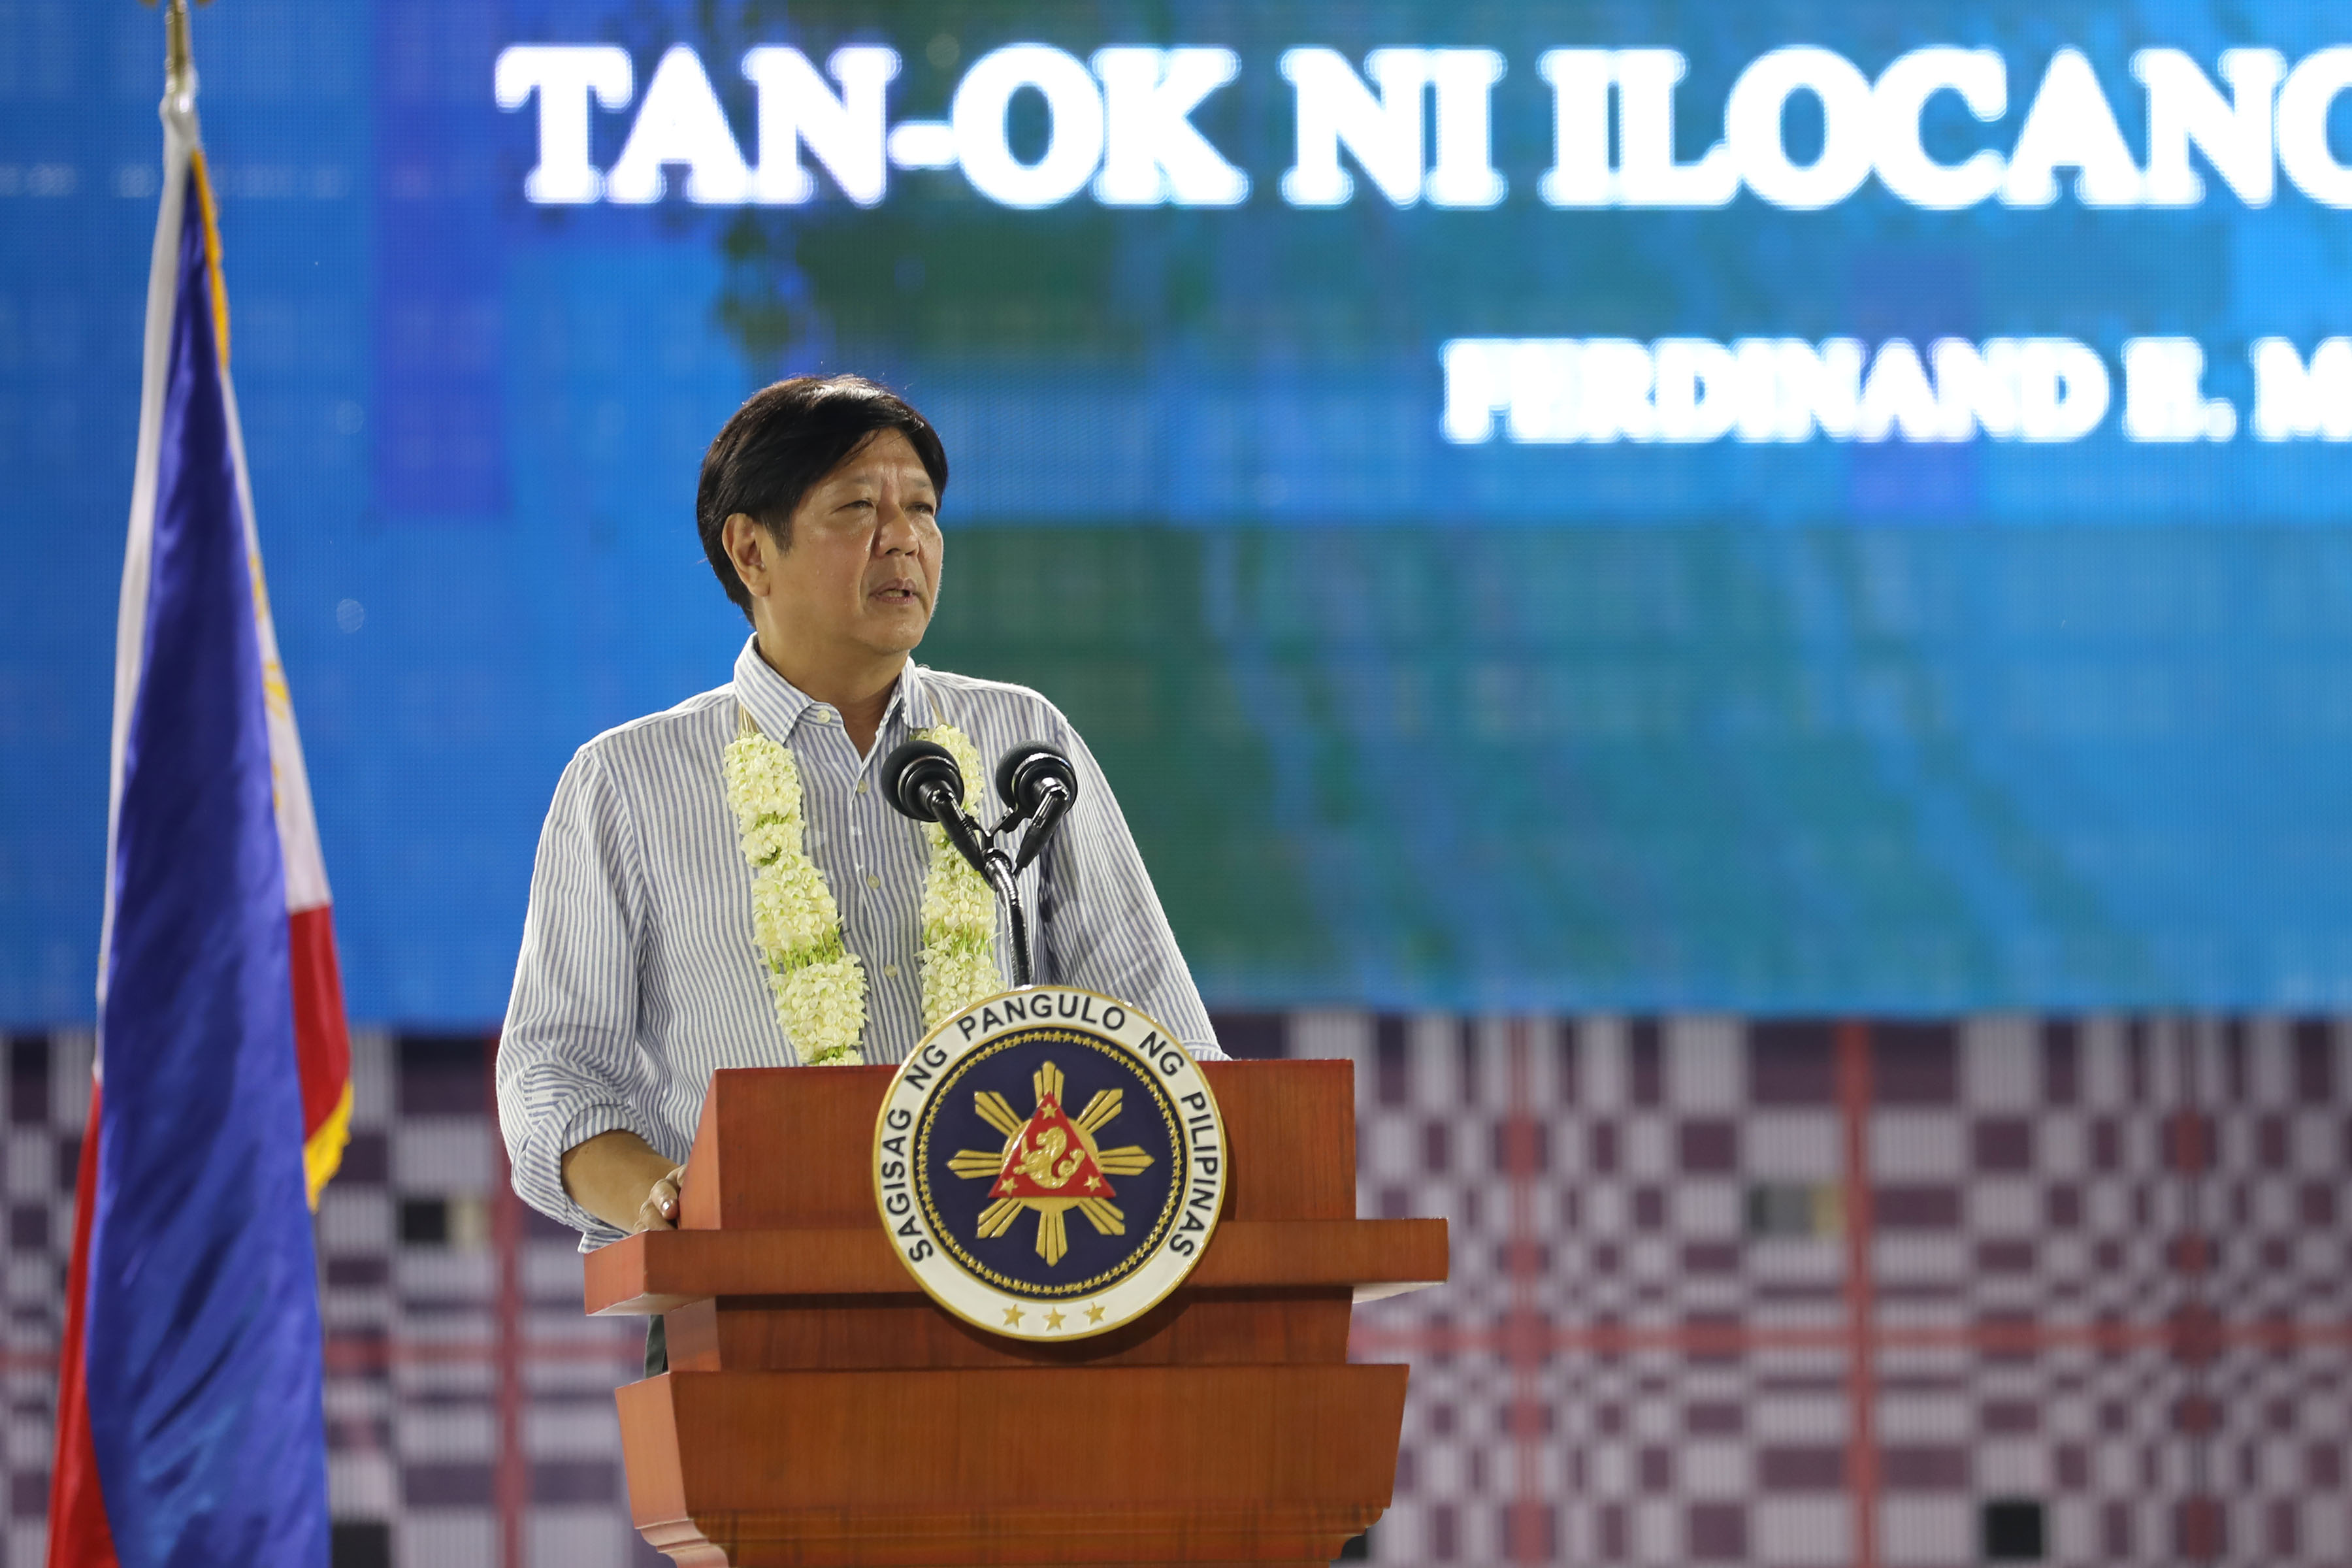 President Ferdinand R. Marcos Jr. graces the grand and colorful festivities of ‘Tan-ok ni Ilocano 2023: The Festival of Festivals’